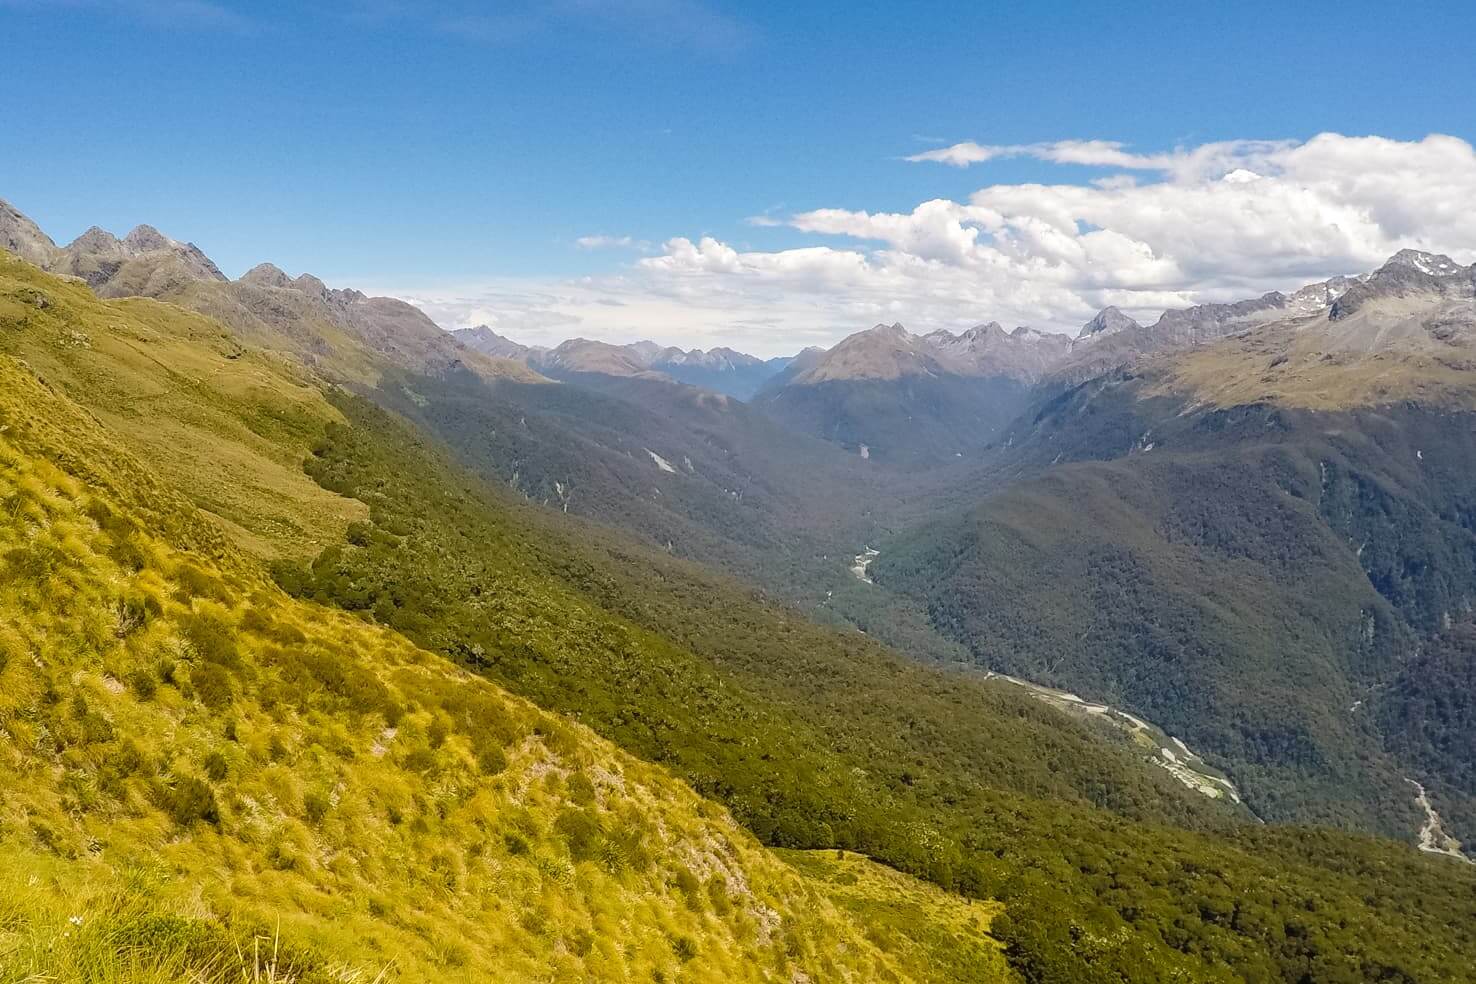 Running Routeburn Track, the alpine adventure in New Zealand